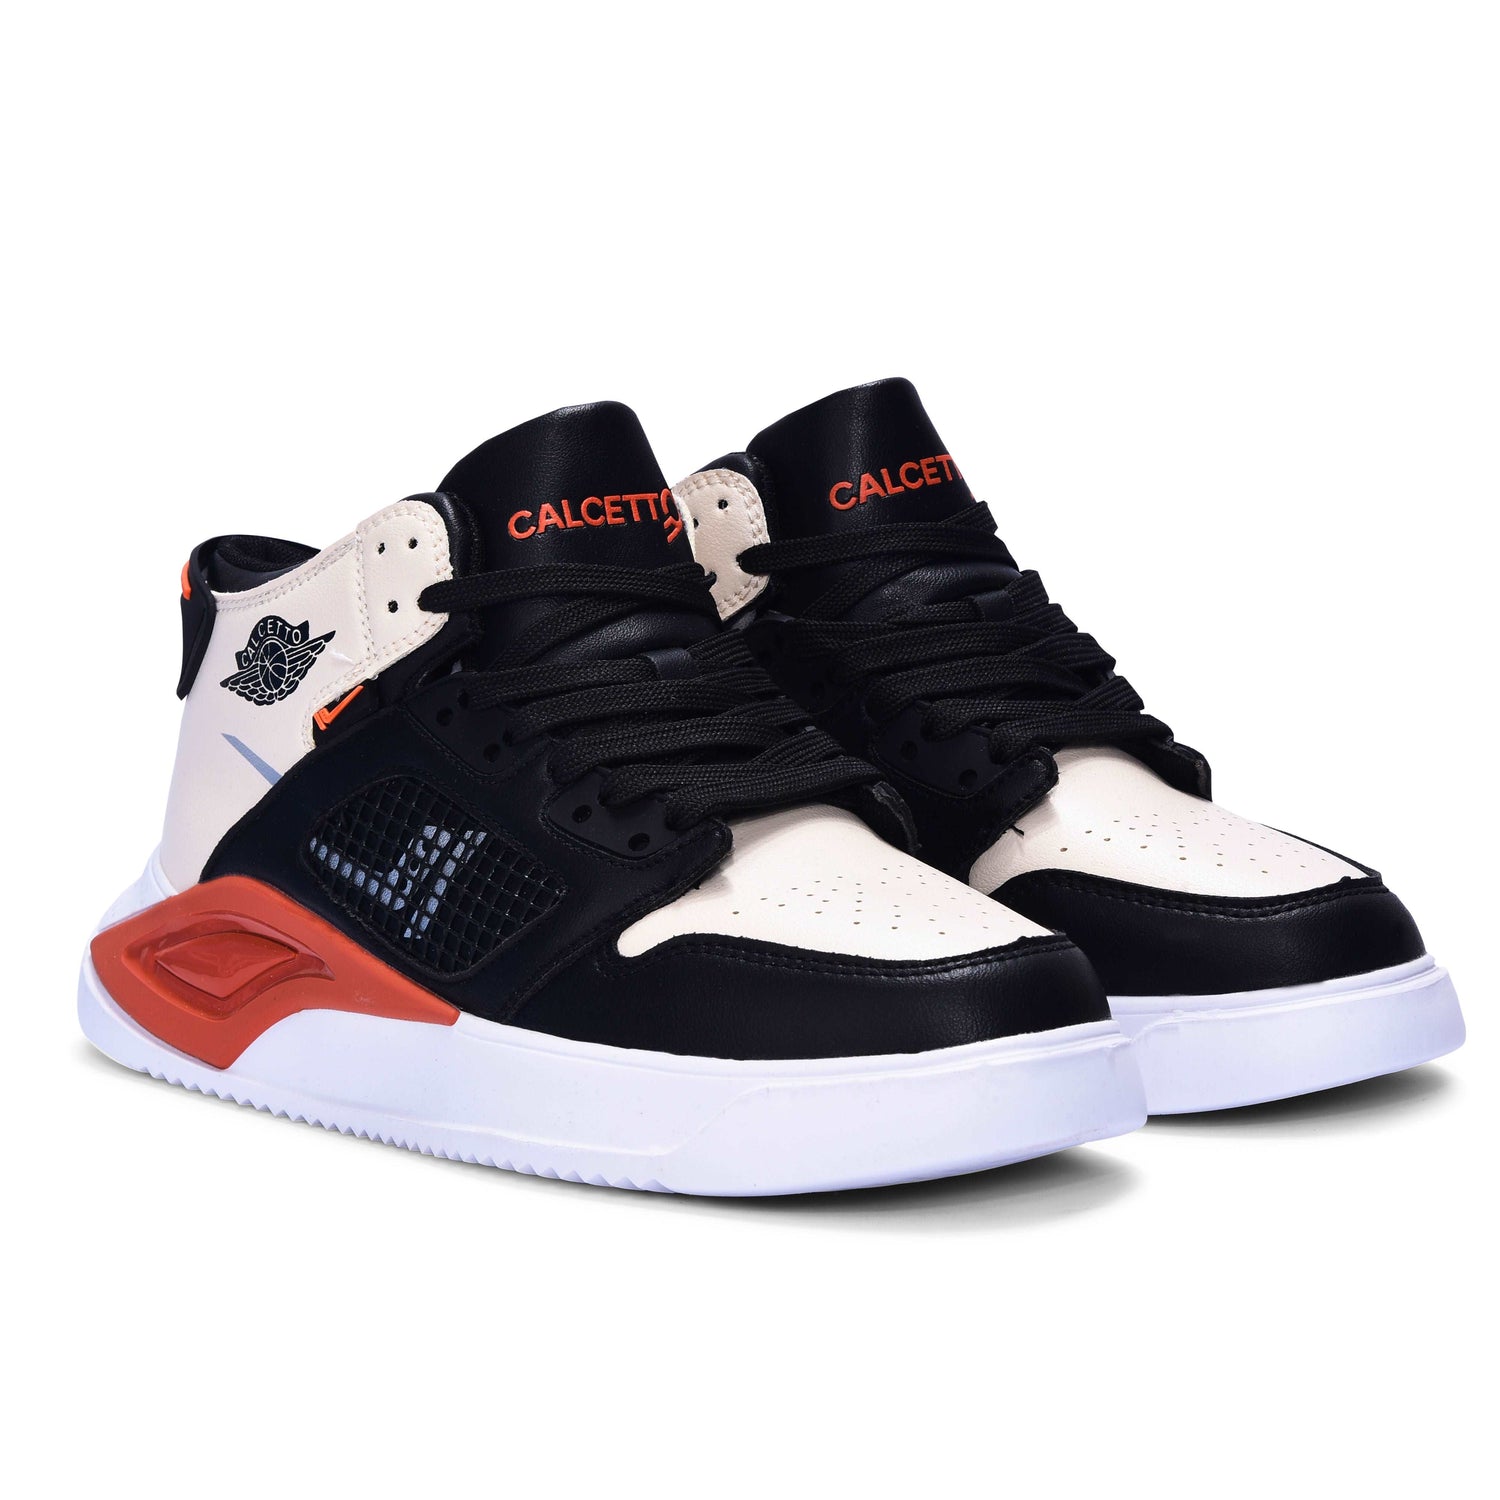 Calcetto CLT-0974 Black Beige Orange Sneaker For Men